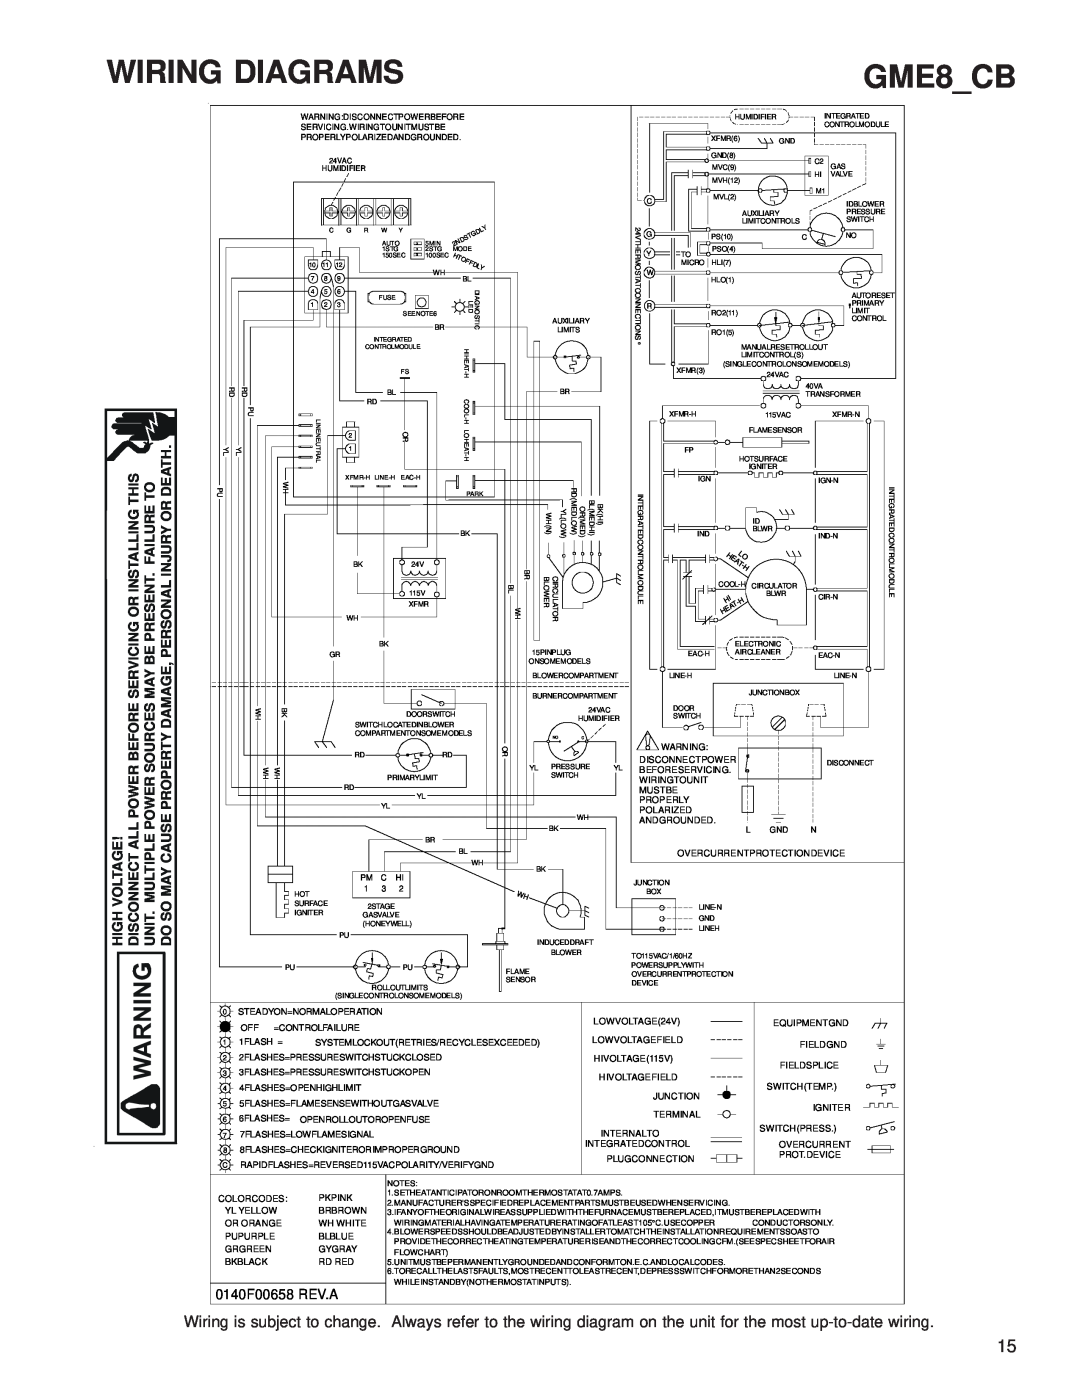 Goodman Mfg service manual GME8 CB, Wiring Diagrams, 0140F00658 REV.A, Hl Eao T H 